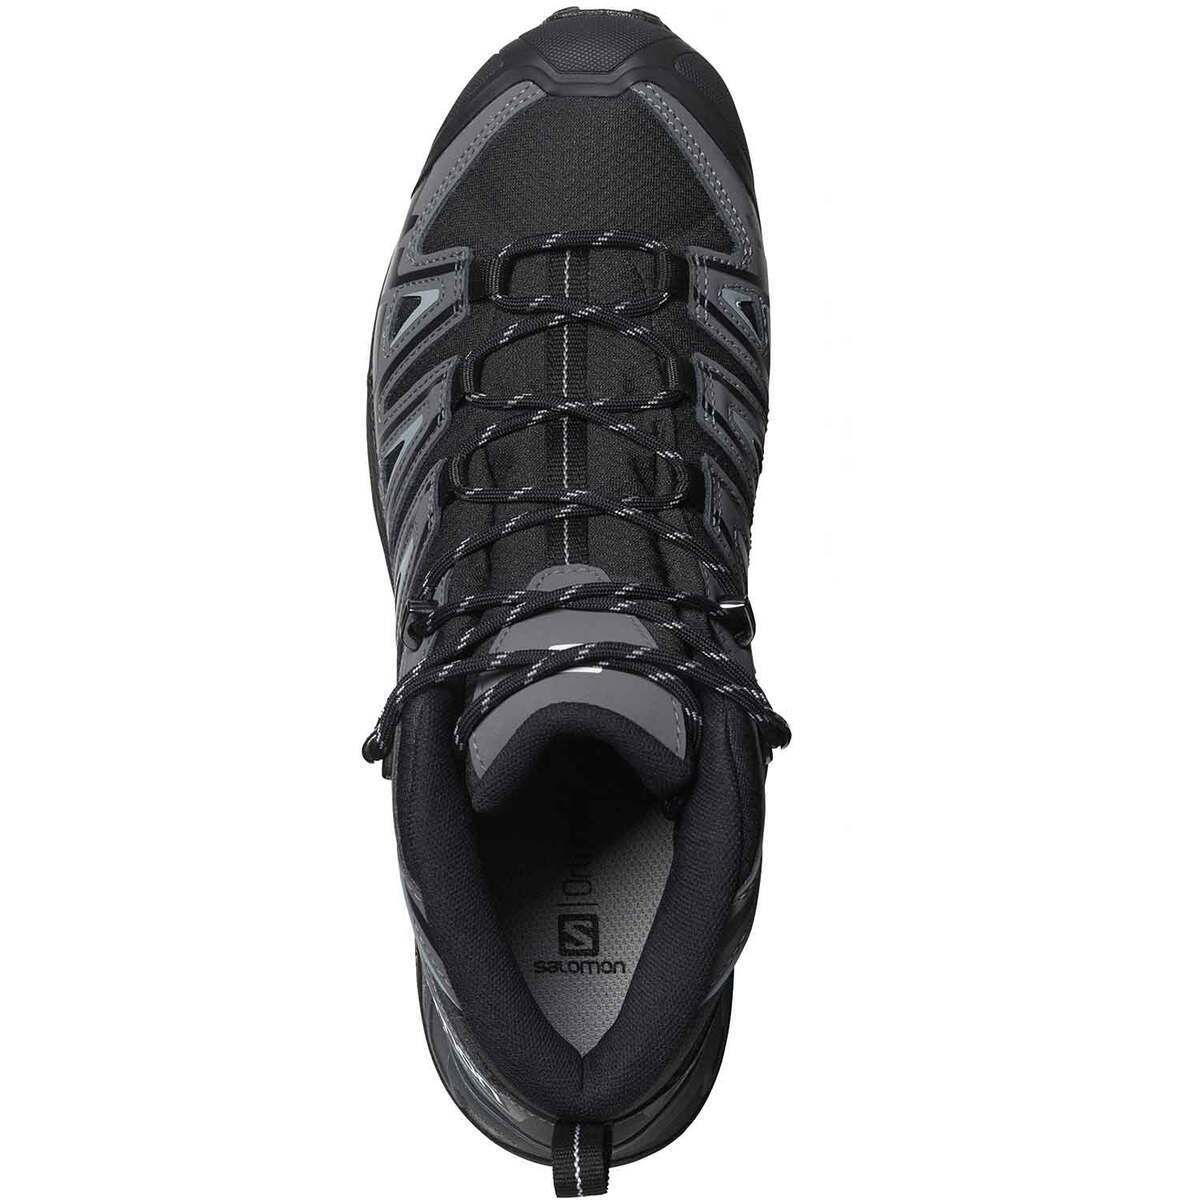 Salomon Men's X Ultra Pioneer Waterproof Mid Hiking Boots | Sportsman's ...